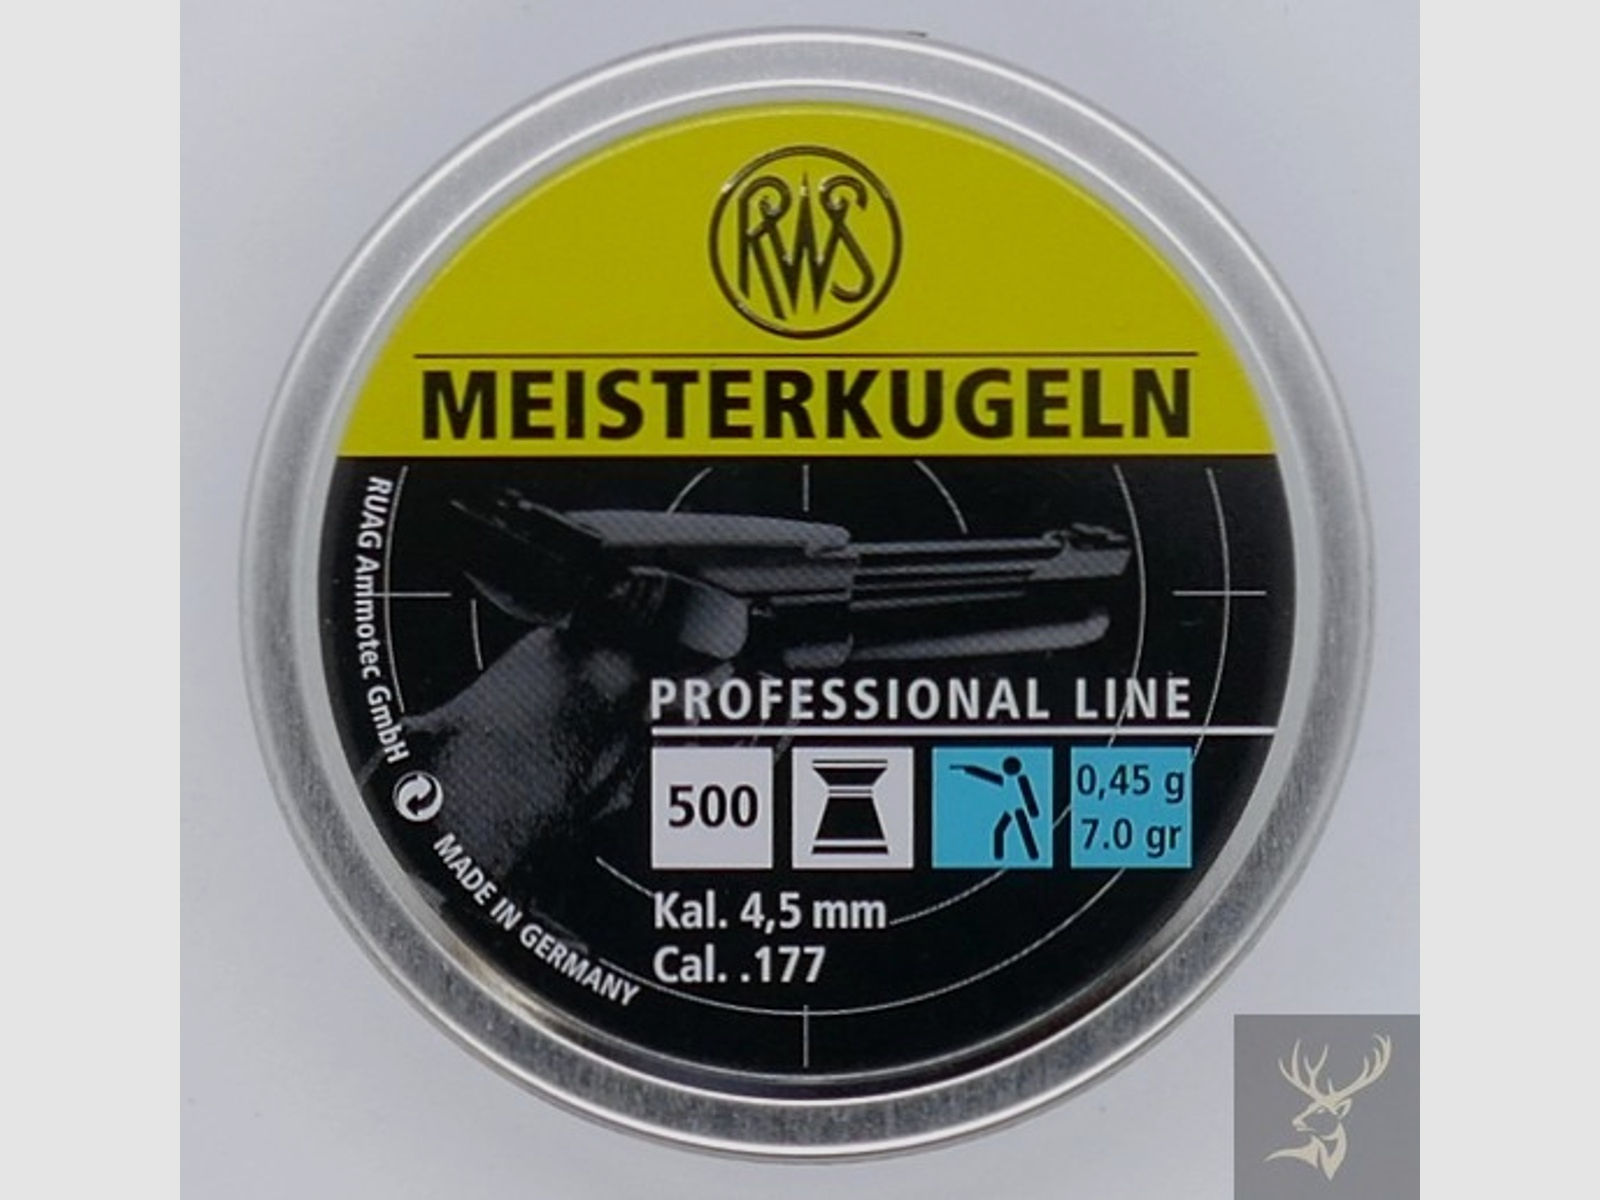 RWS Meisterkugeln Lupi 0,45 4,48mm